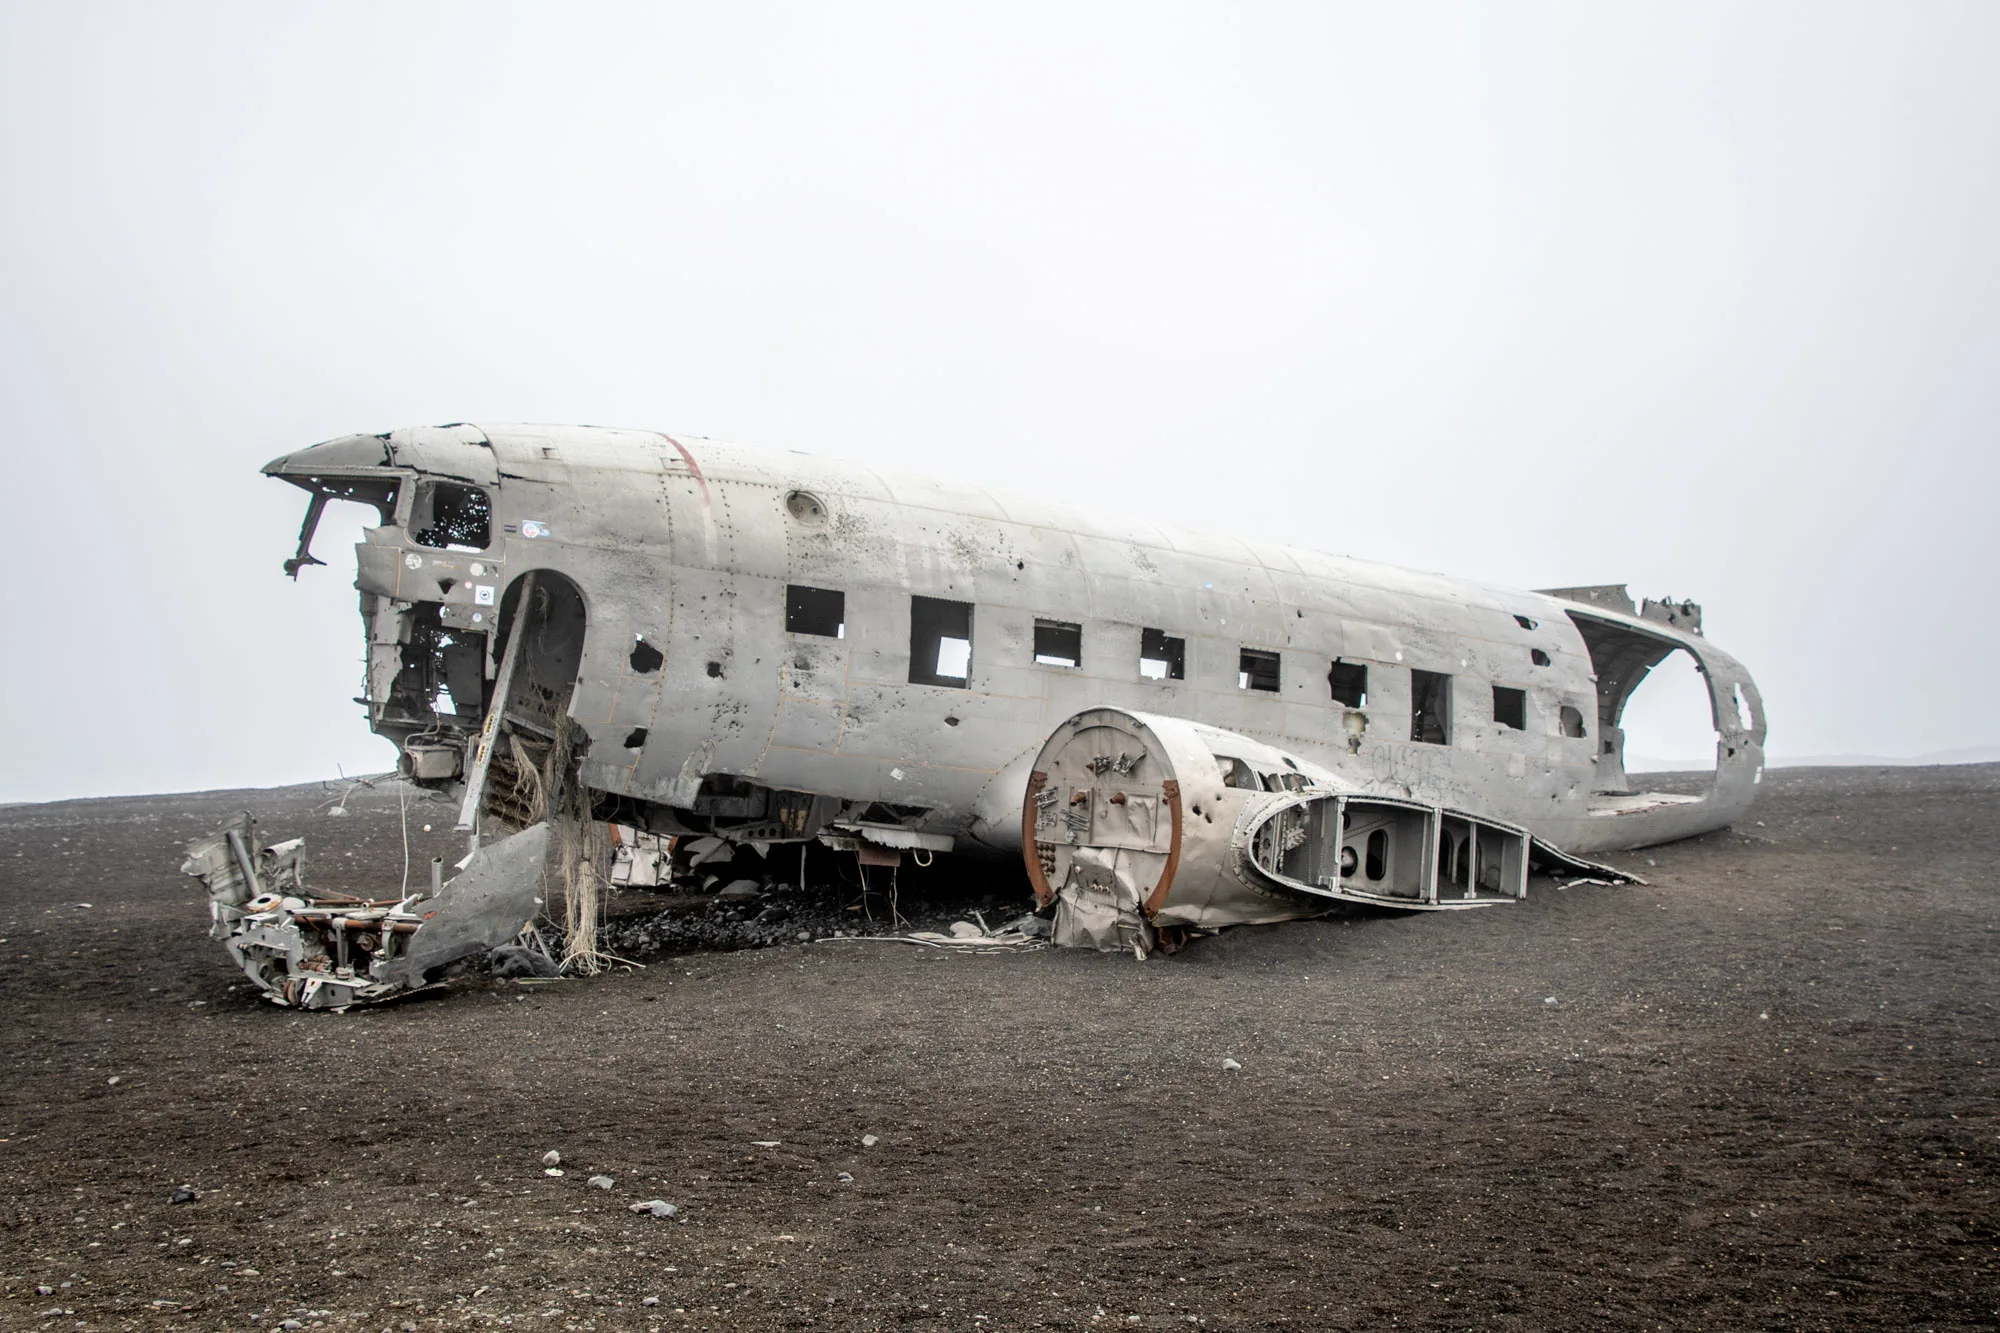 The DC-3 plane abandoned on Sólheimasandur beach